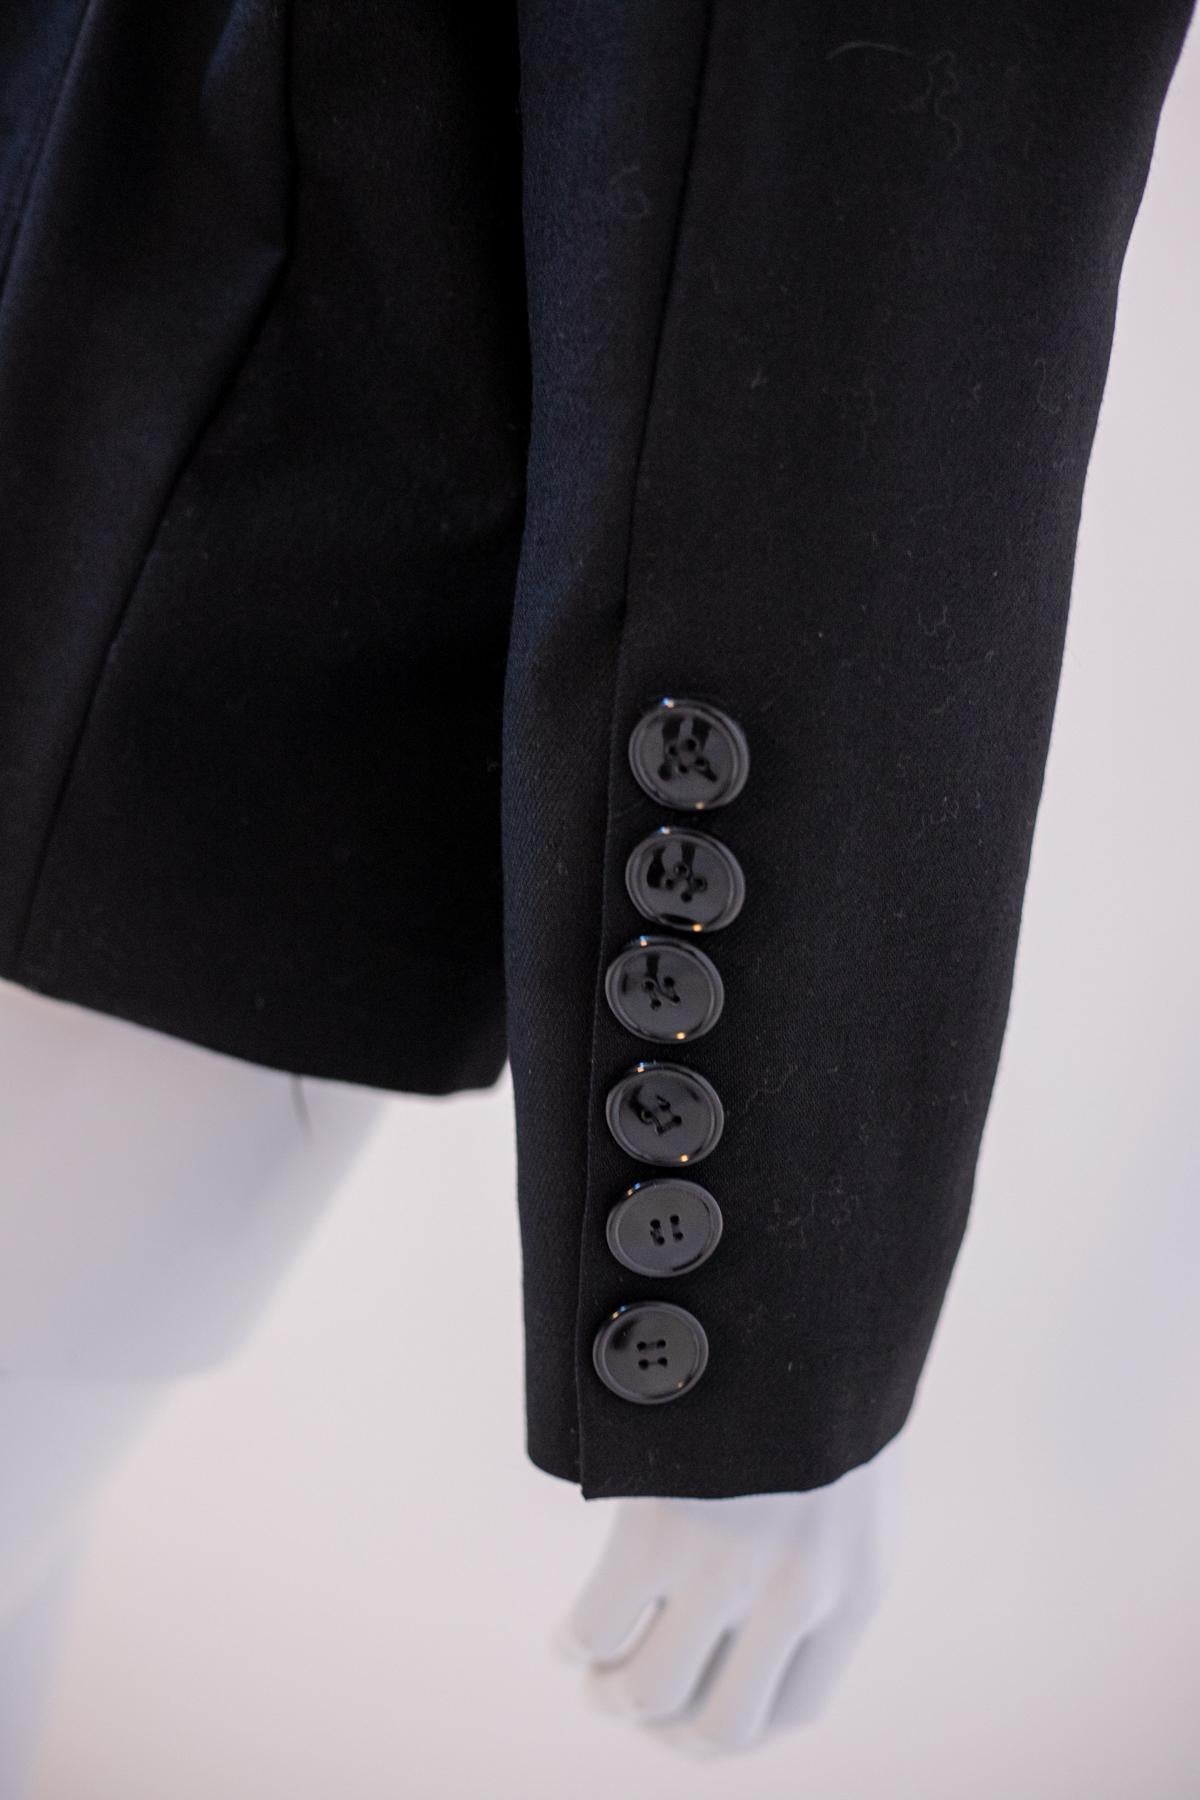 Gai Mattiolo Jeans Black Wool Jacket For Sale 6